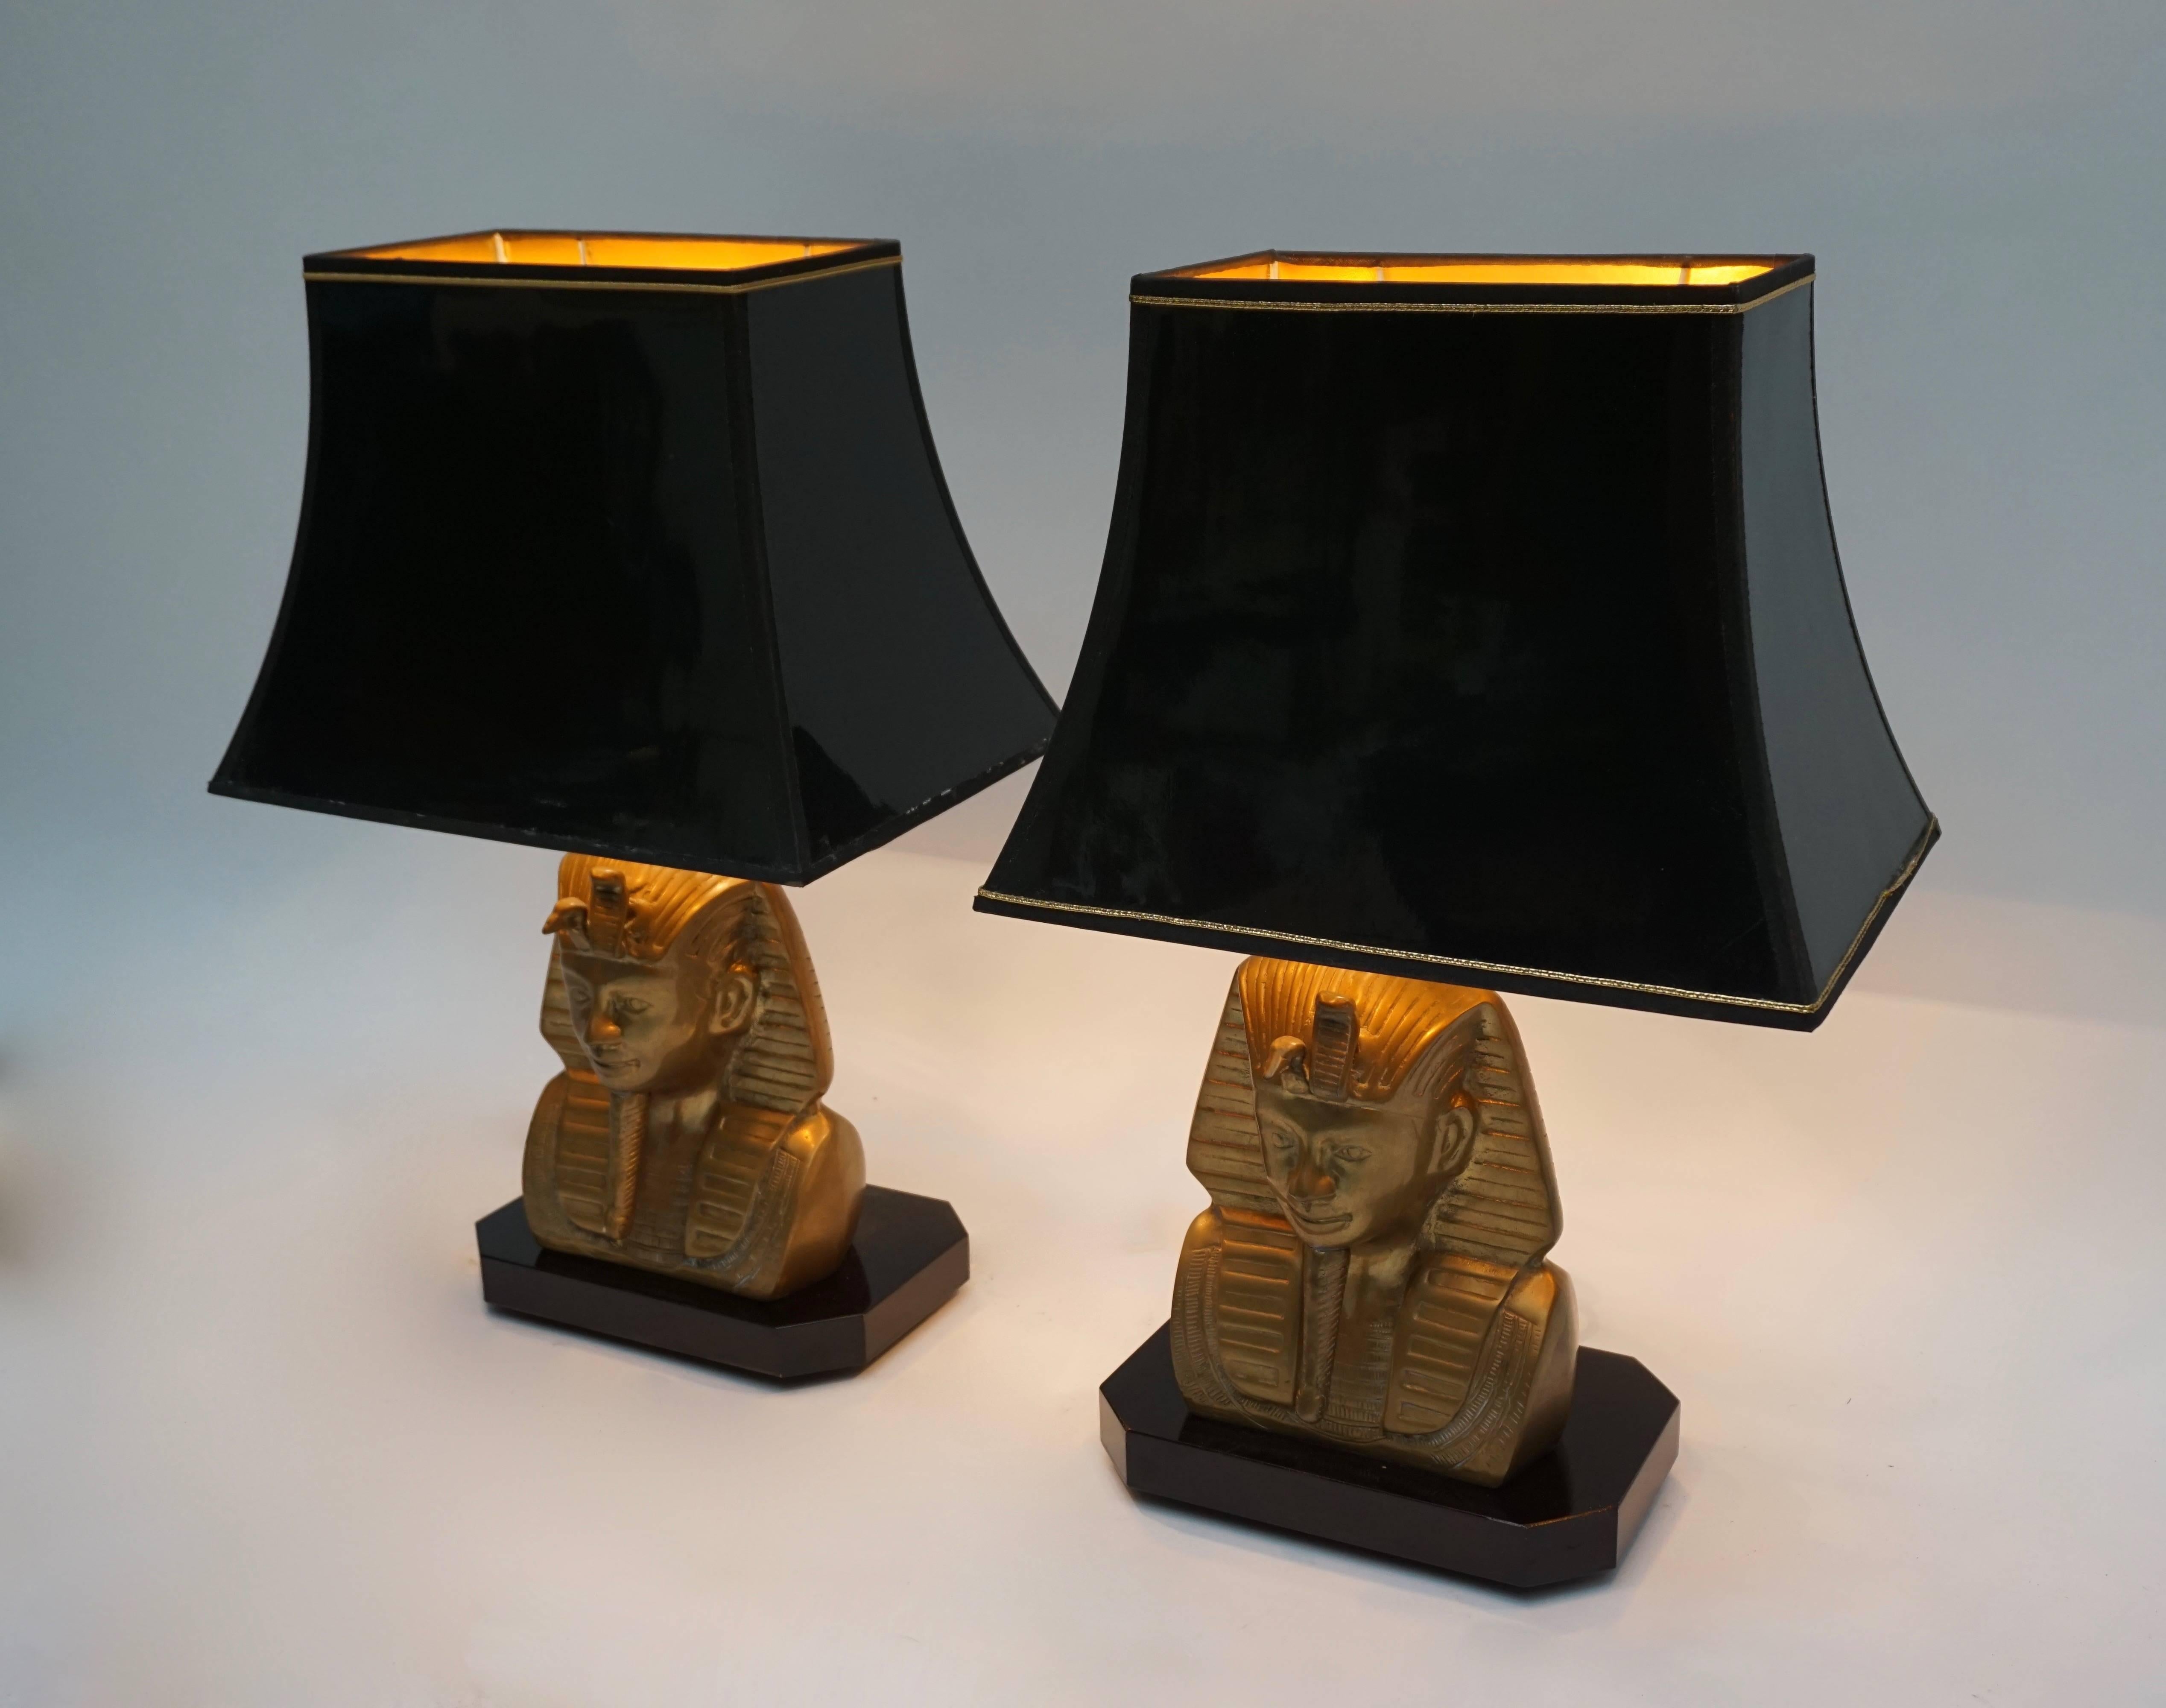 Pair of brass table lamps.
Height:55 cm.
Width:36 cm.
Depth:25 cm.